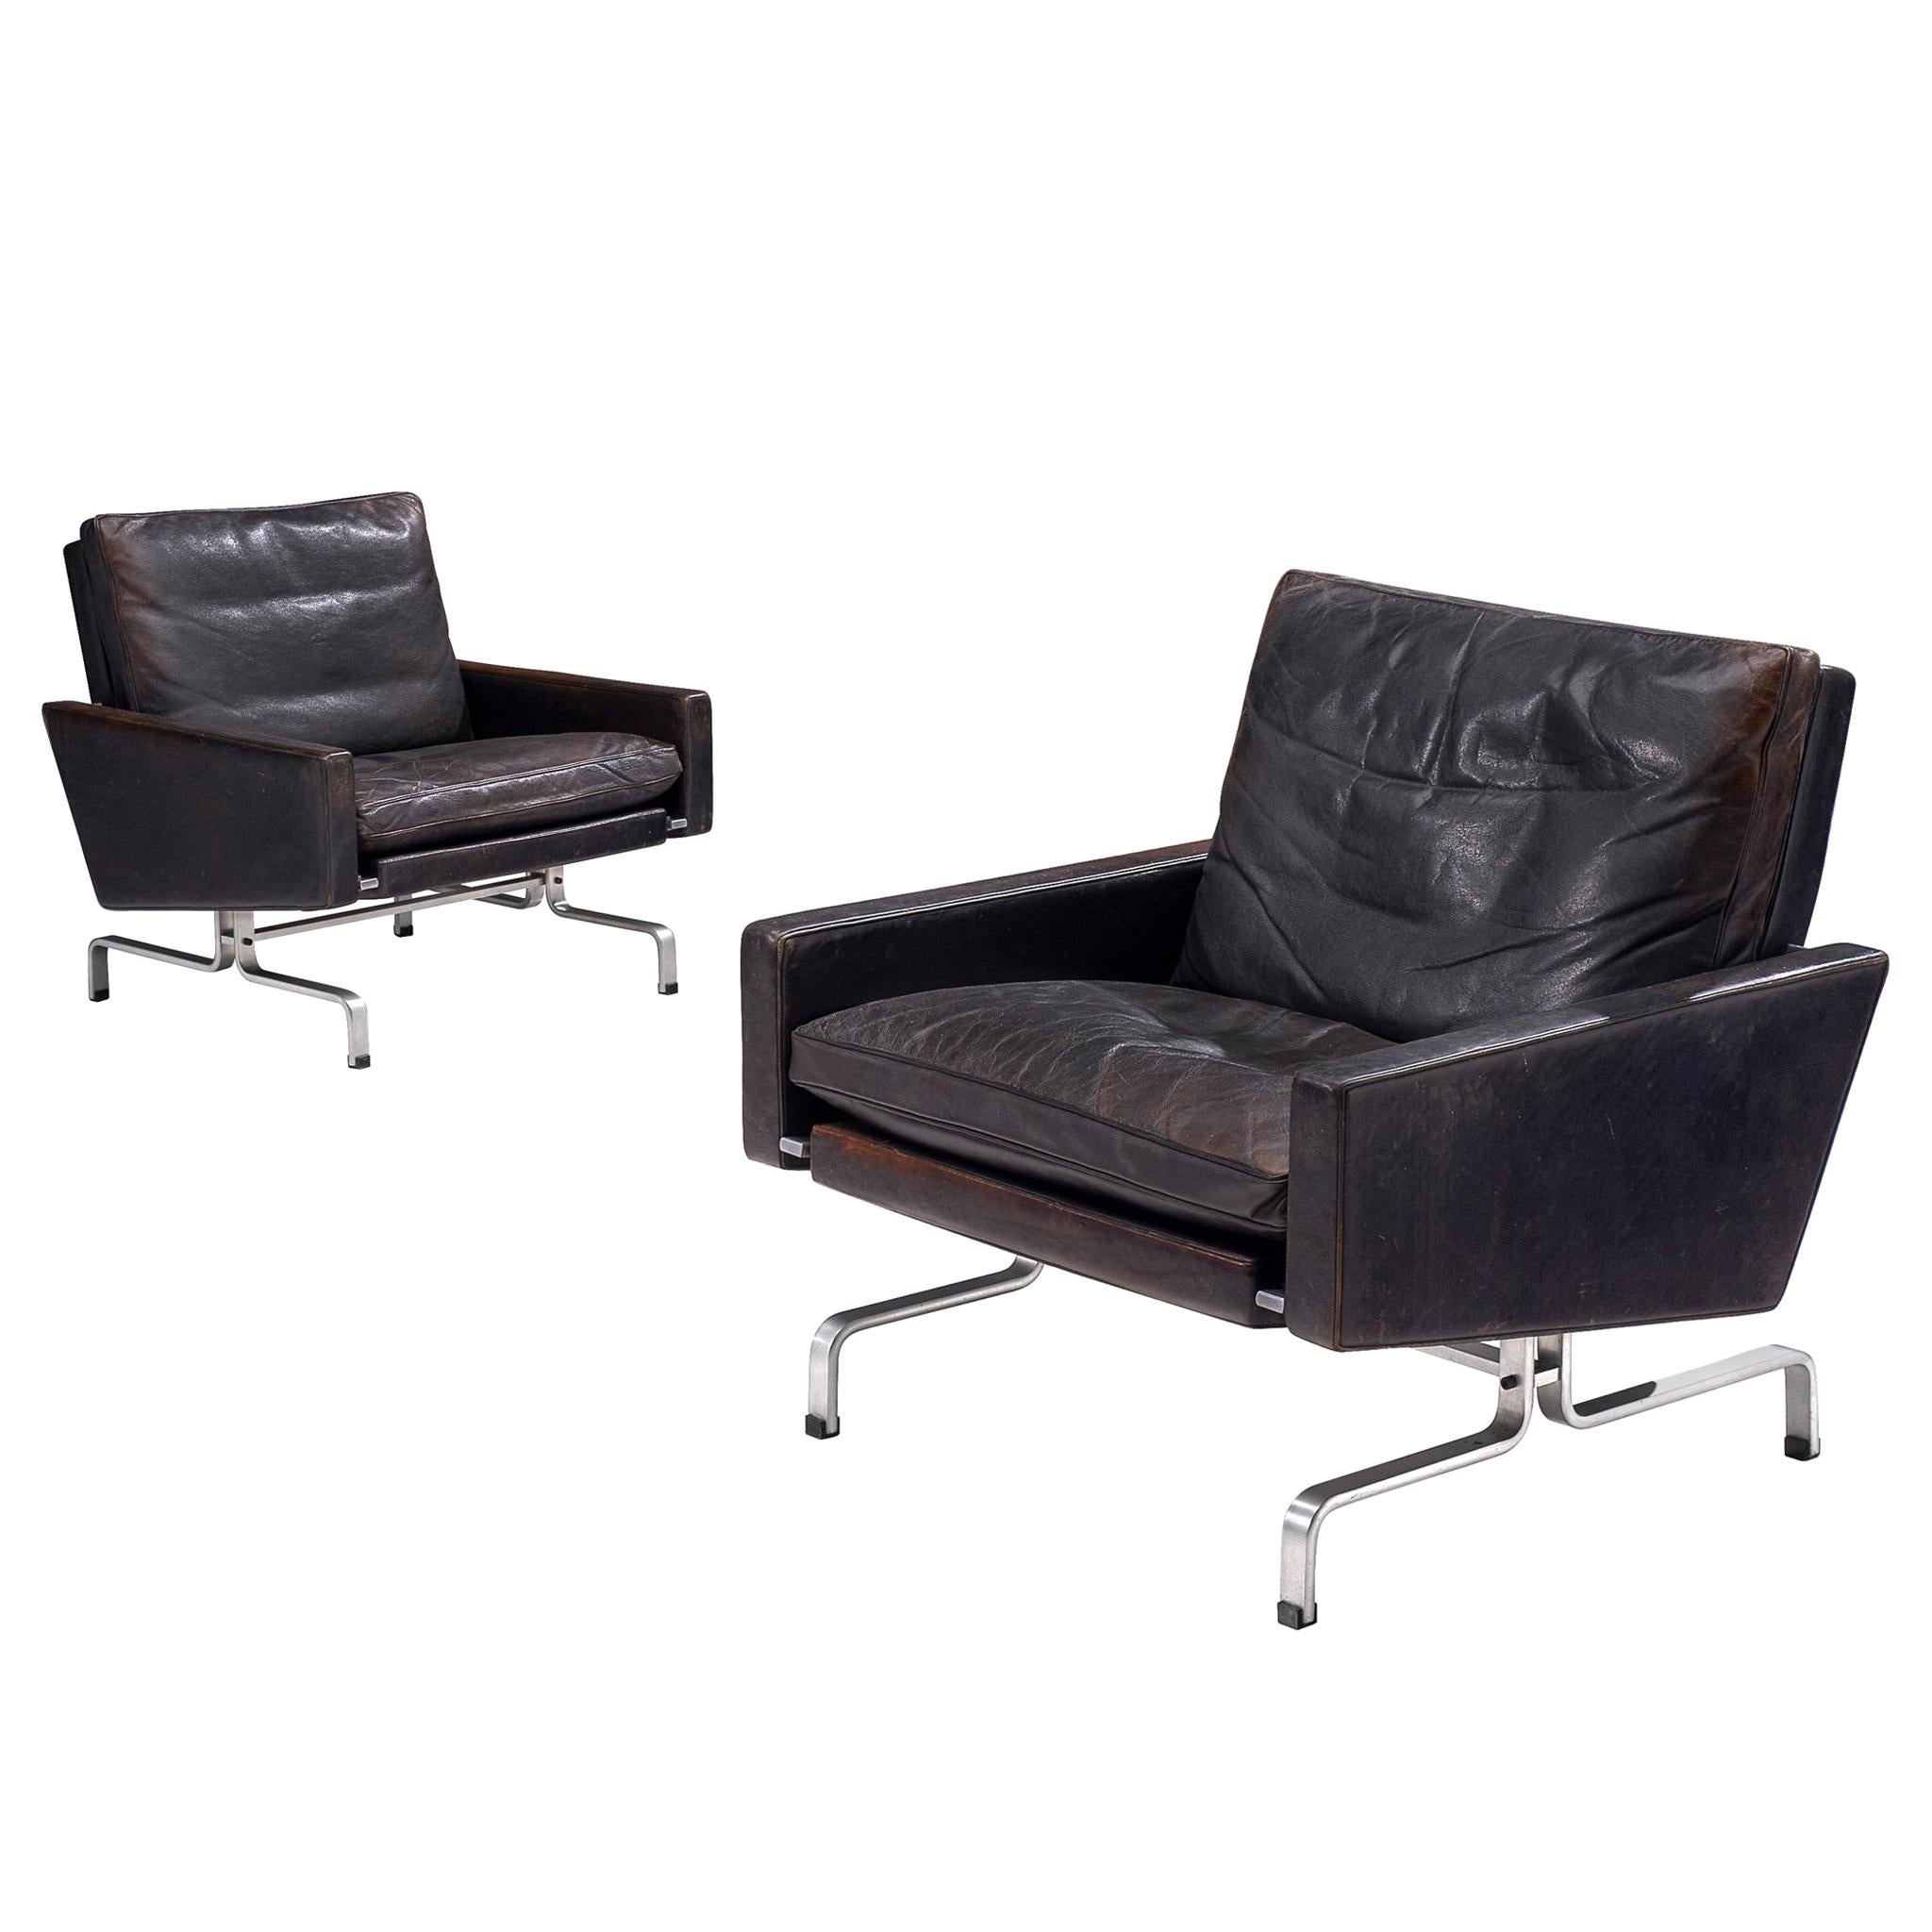 Pair of Poul Kjaerholm PK31-1 Lounge Chairs in Original Black Leather